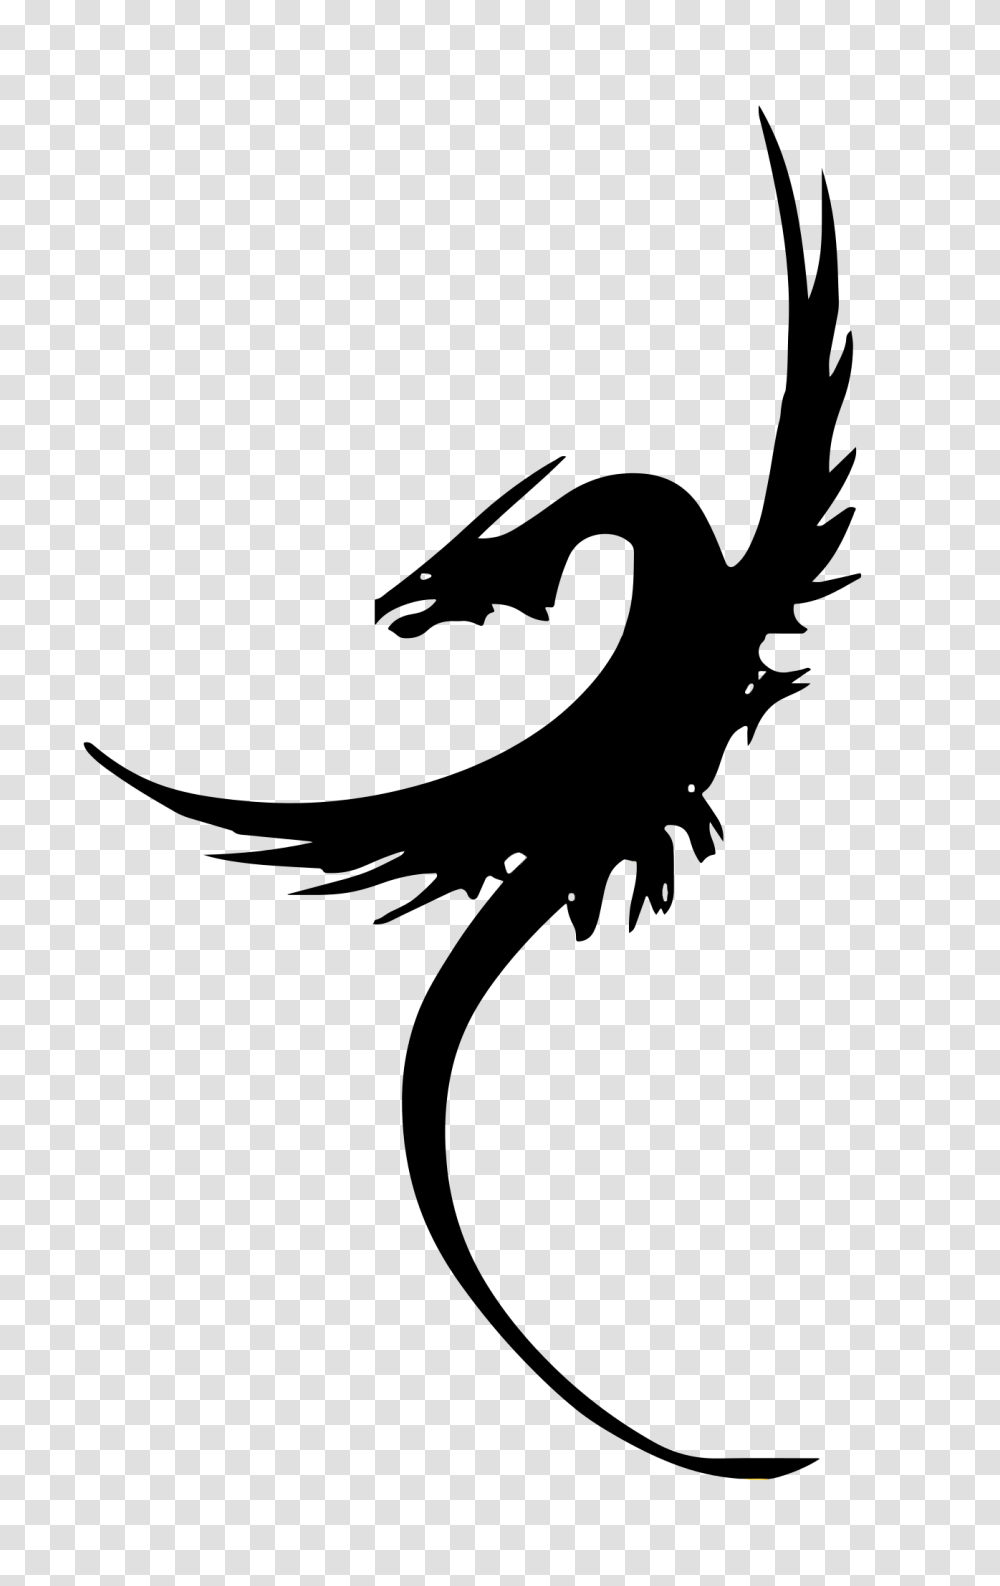 Dragon Tattoo Image, Cross, Silhouette, Emblem Transparent Png